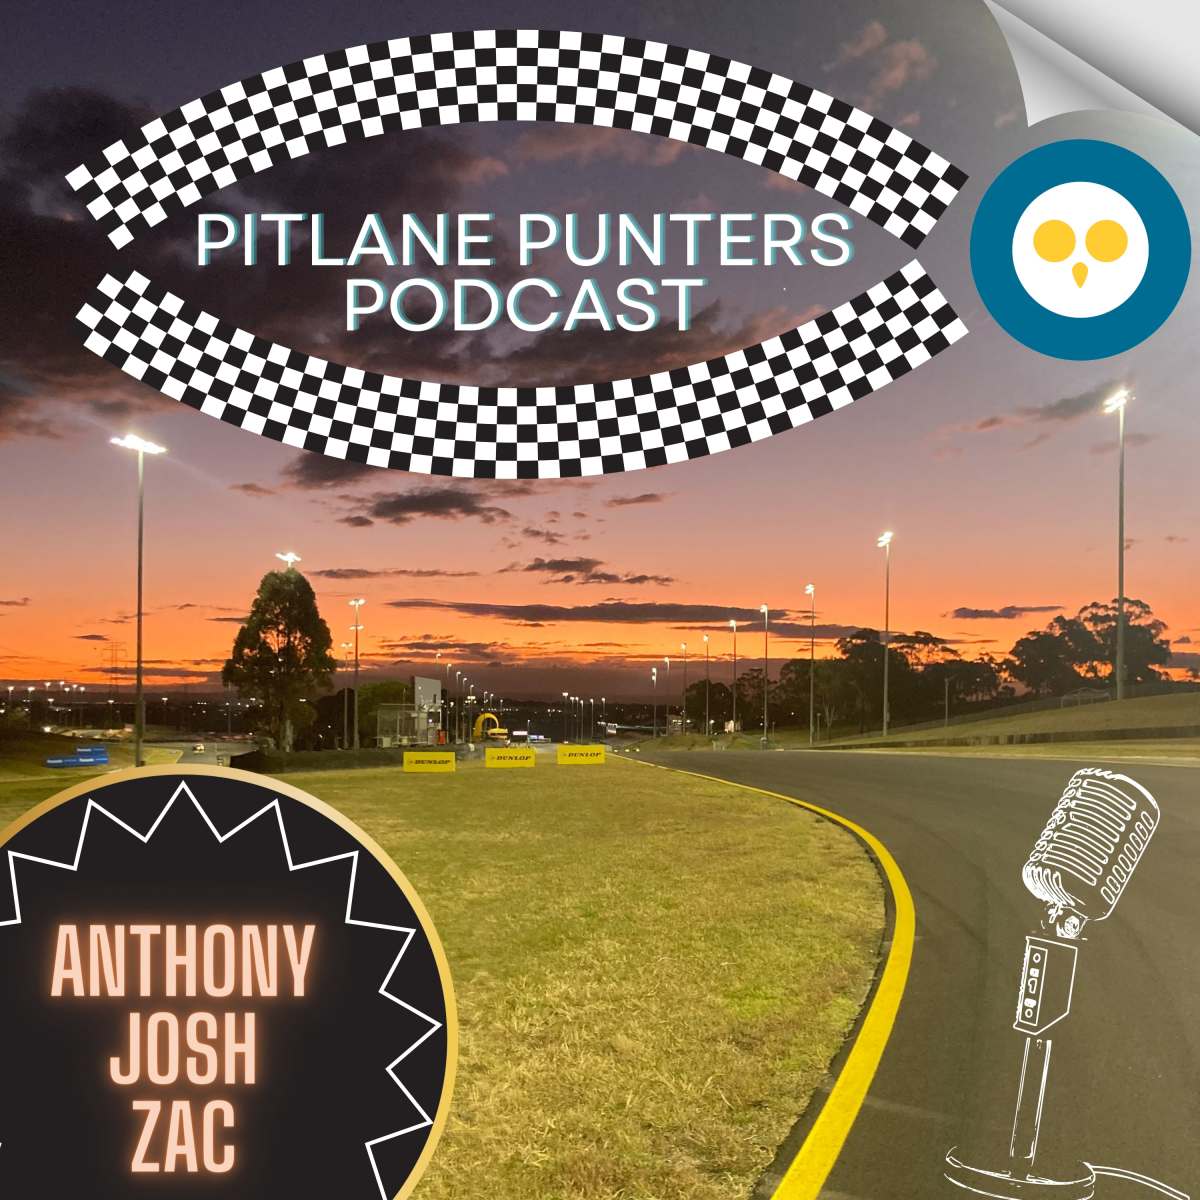 Pitlane Punters Podcast show tile